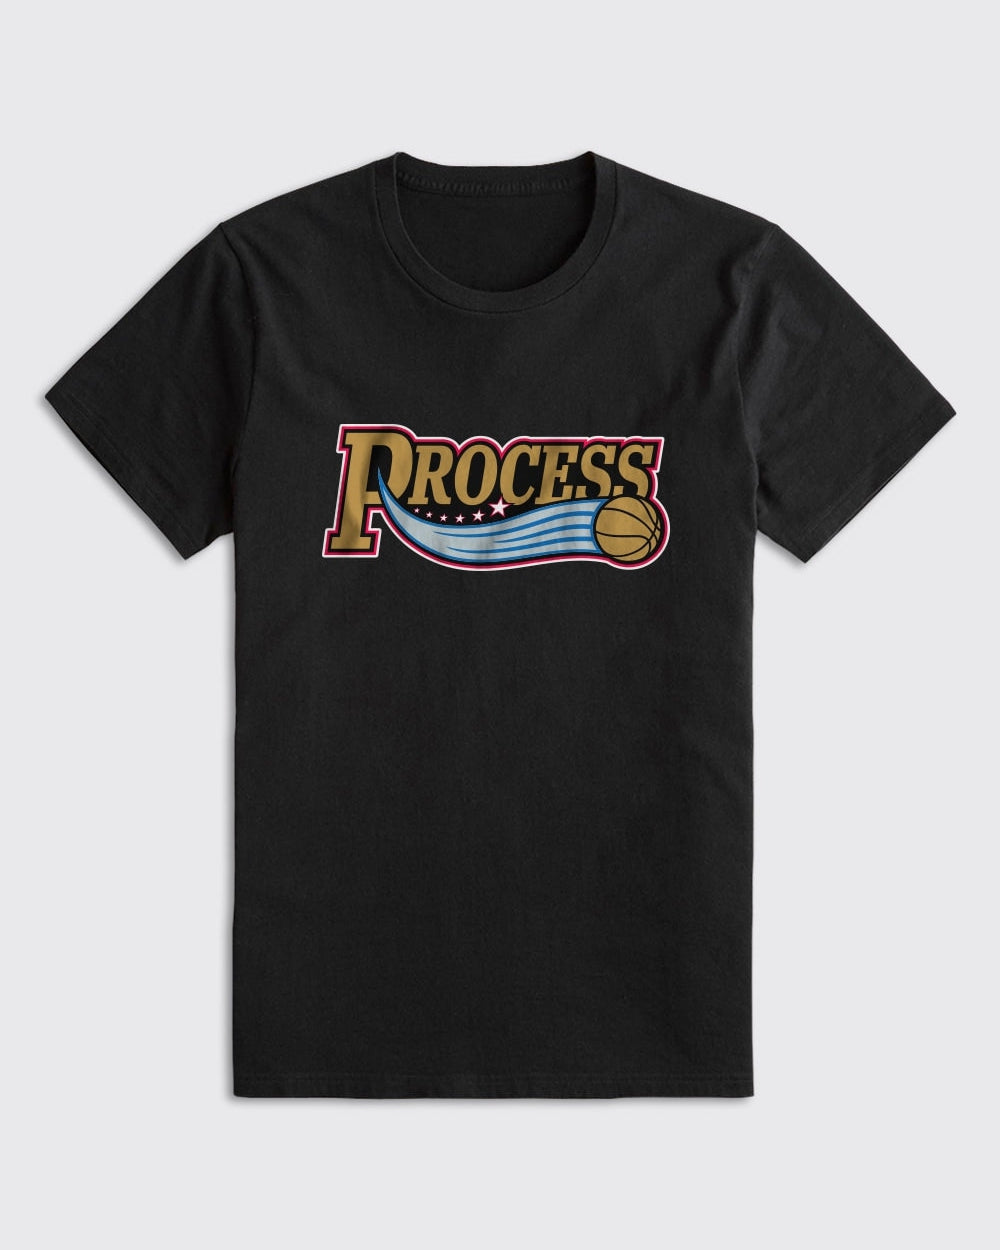 Process Logo Shirt - 76ers, T-Shirts - Philly Sports Shirts